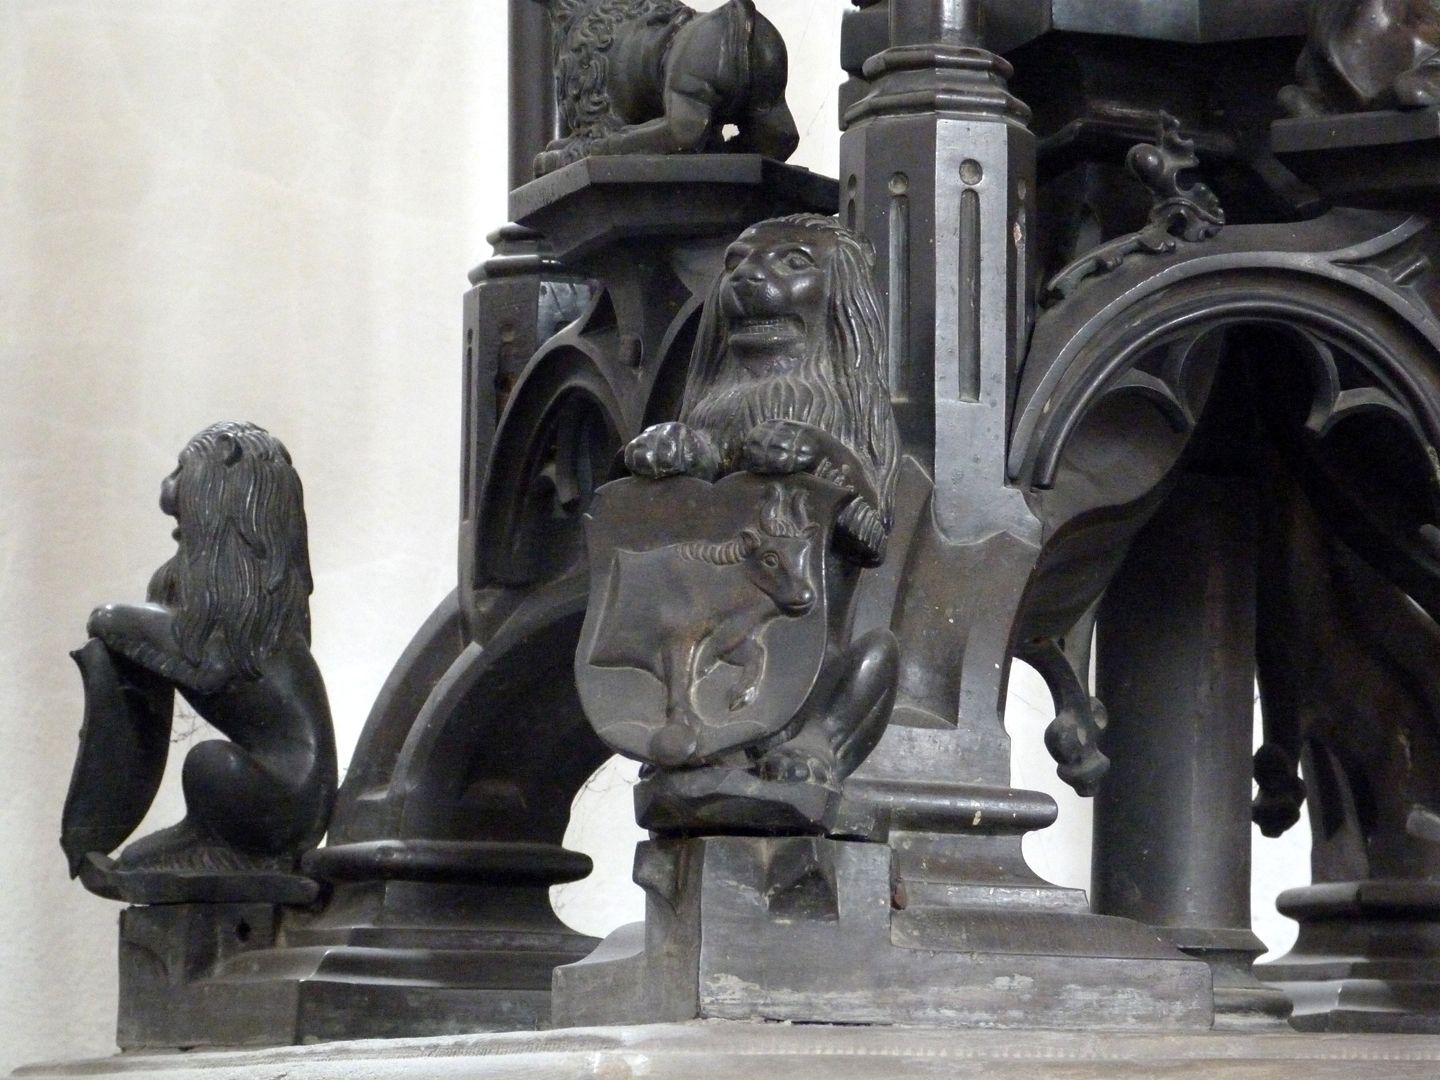 Baptismal font (Ochsenfurt) LIon with the Ochsenfurt coat of arms